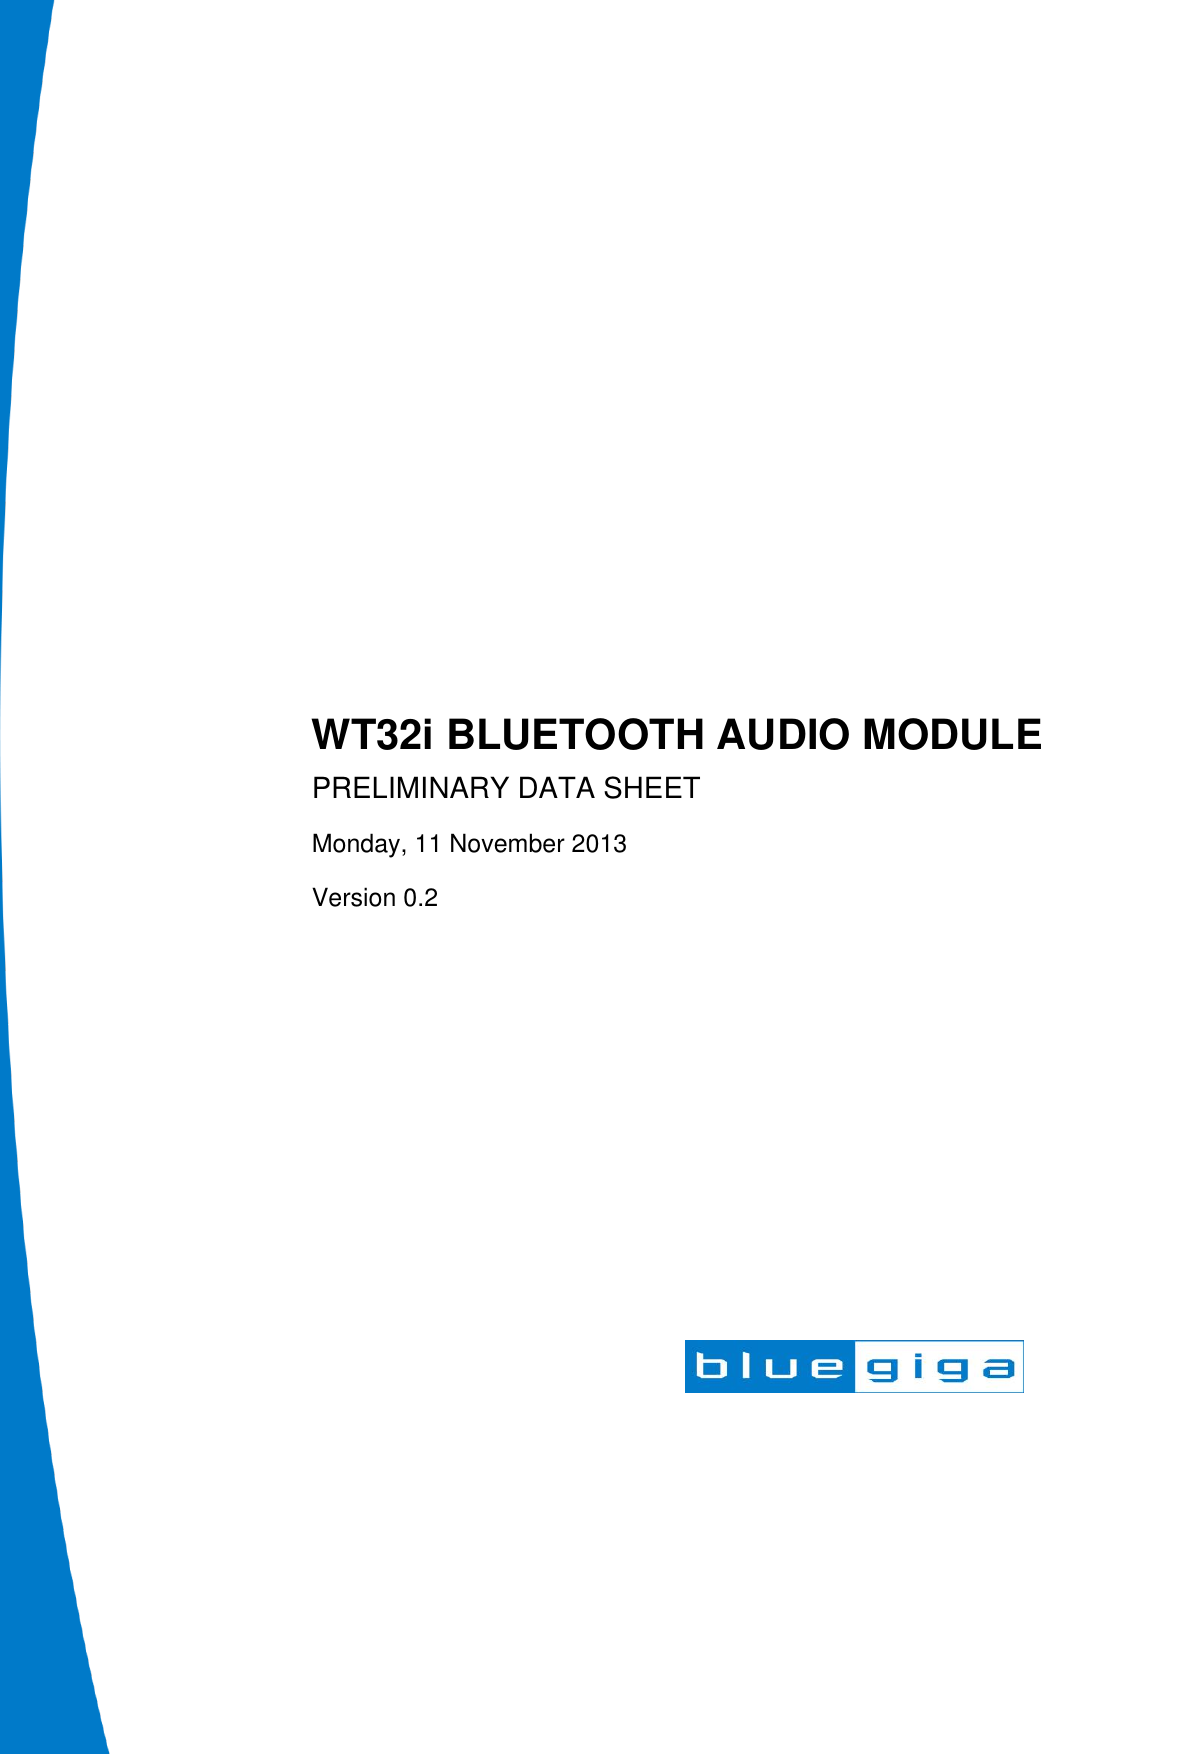                          WT32i BLUETOOTH AUDIO MODULE PRELIMINARY DATA SHEET Monday, 11 November 2013 Version 0.2  